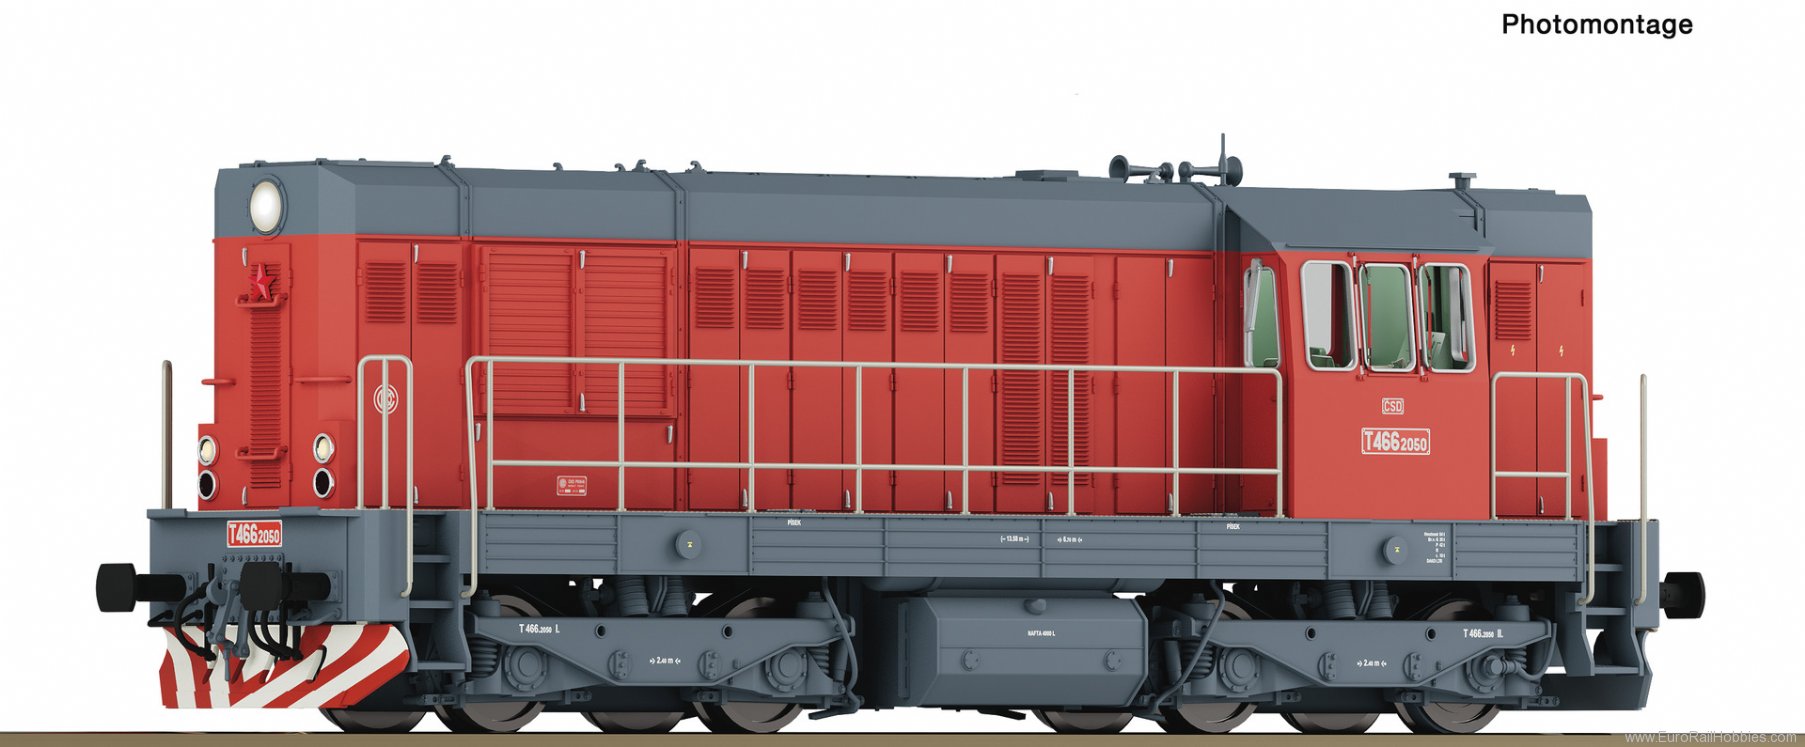 Roco 7320003 Diesel locomotive T 466 2050, CSD (AC Digital